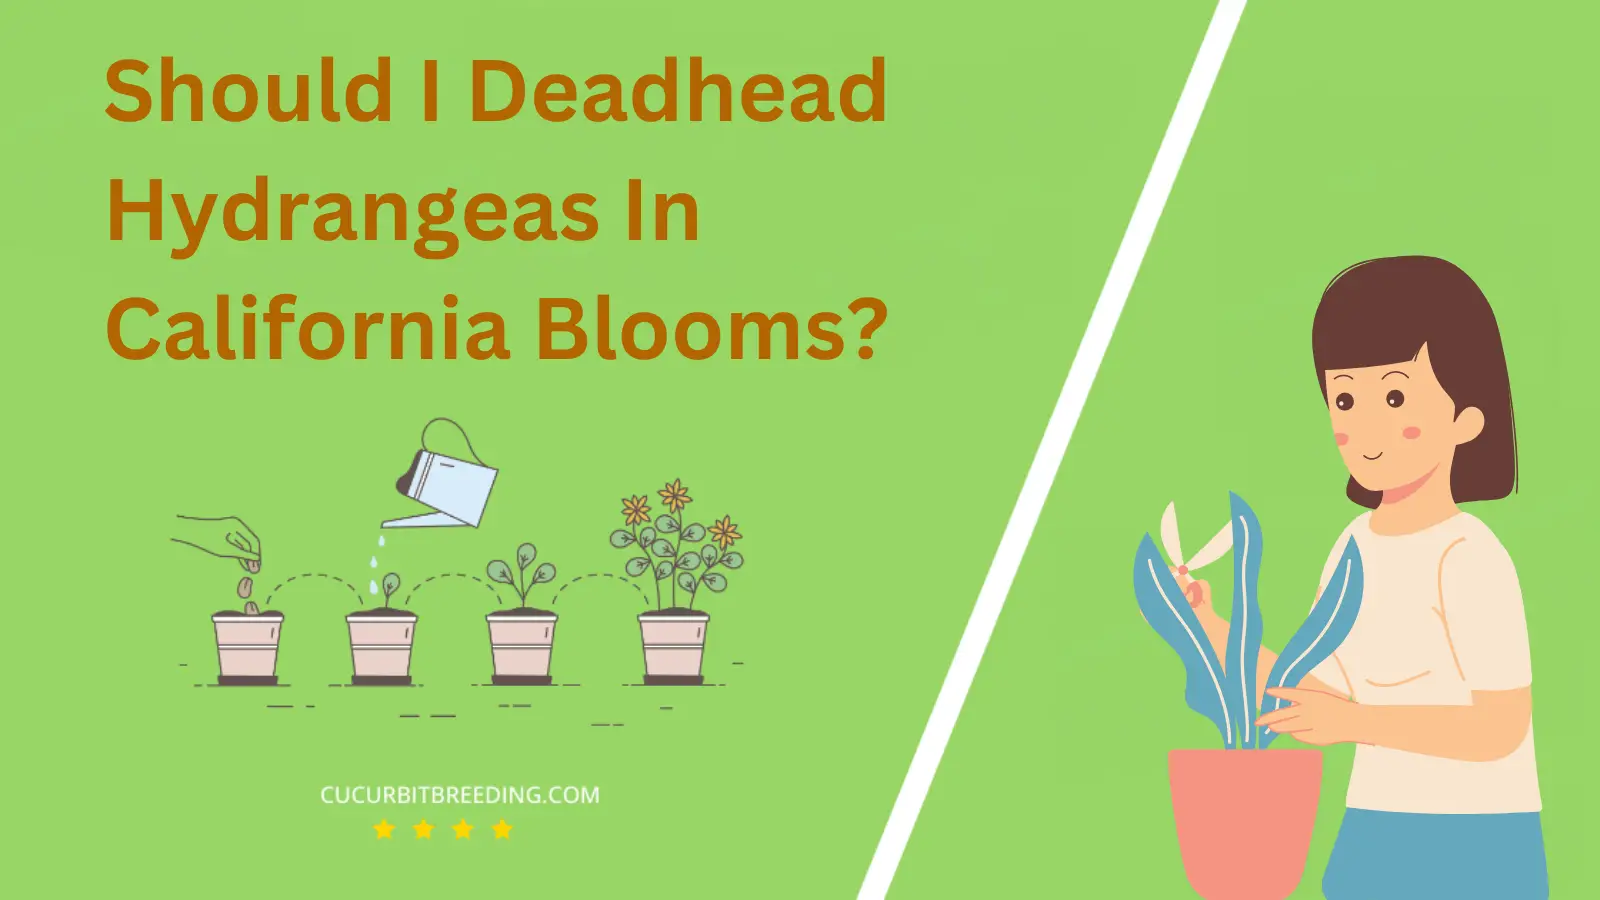 Should I Deadhead Hydrangeas In California Blooms?